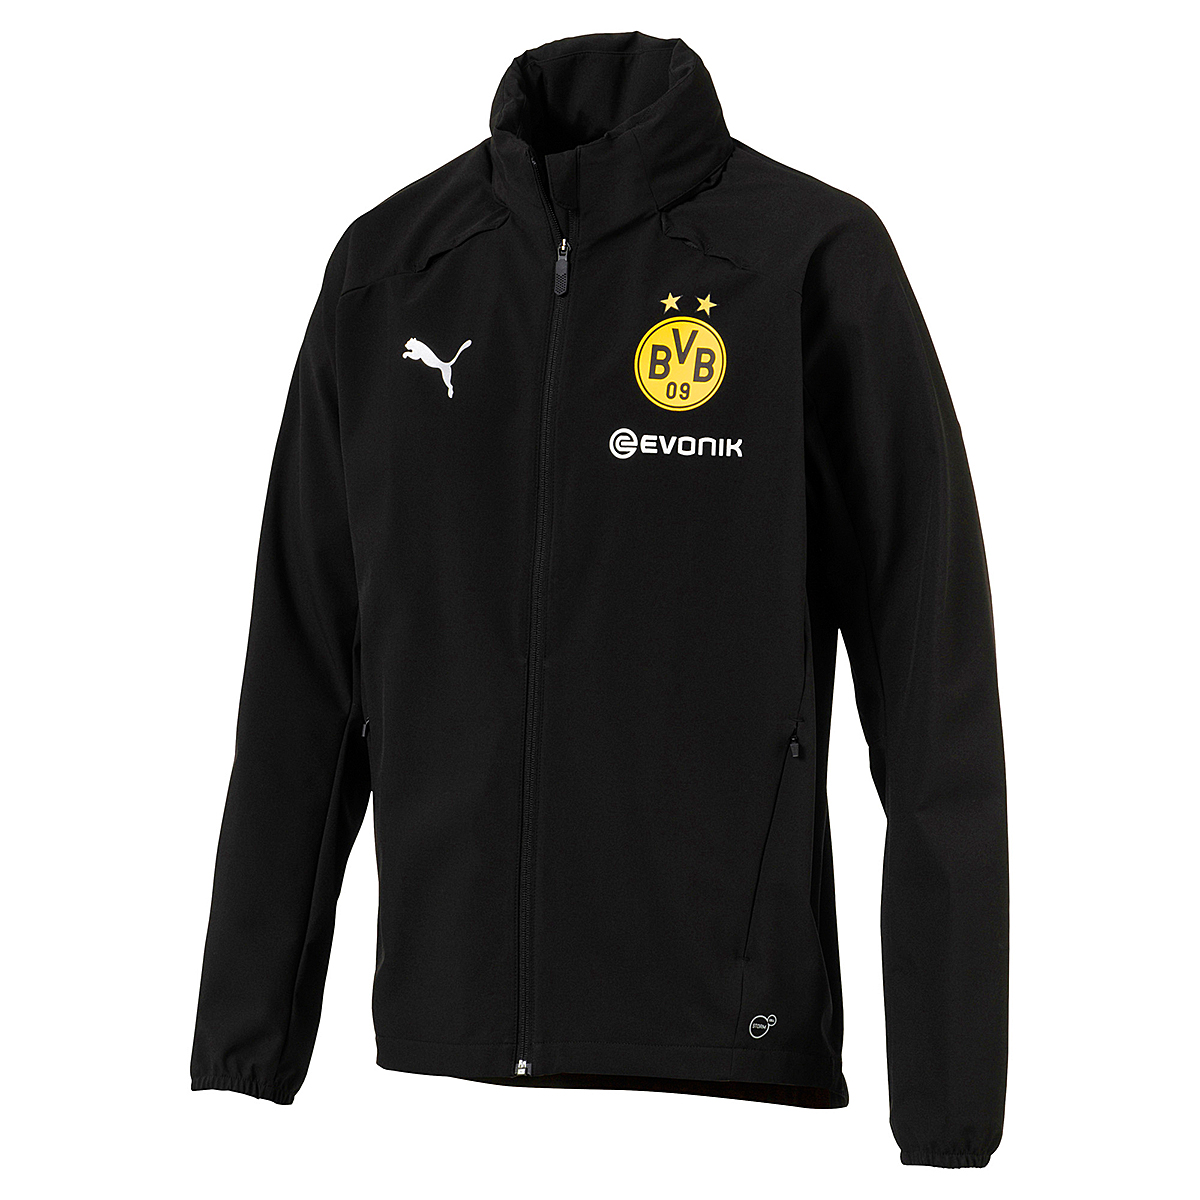 Puma BVB Rain Jacket with Sponsor Logo Herren Regenjacke Borussia Dortmund Evonik 2018/2019